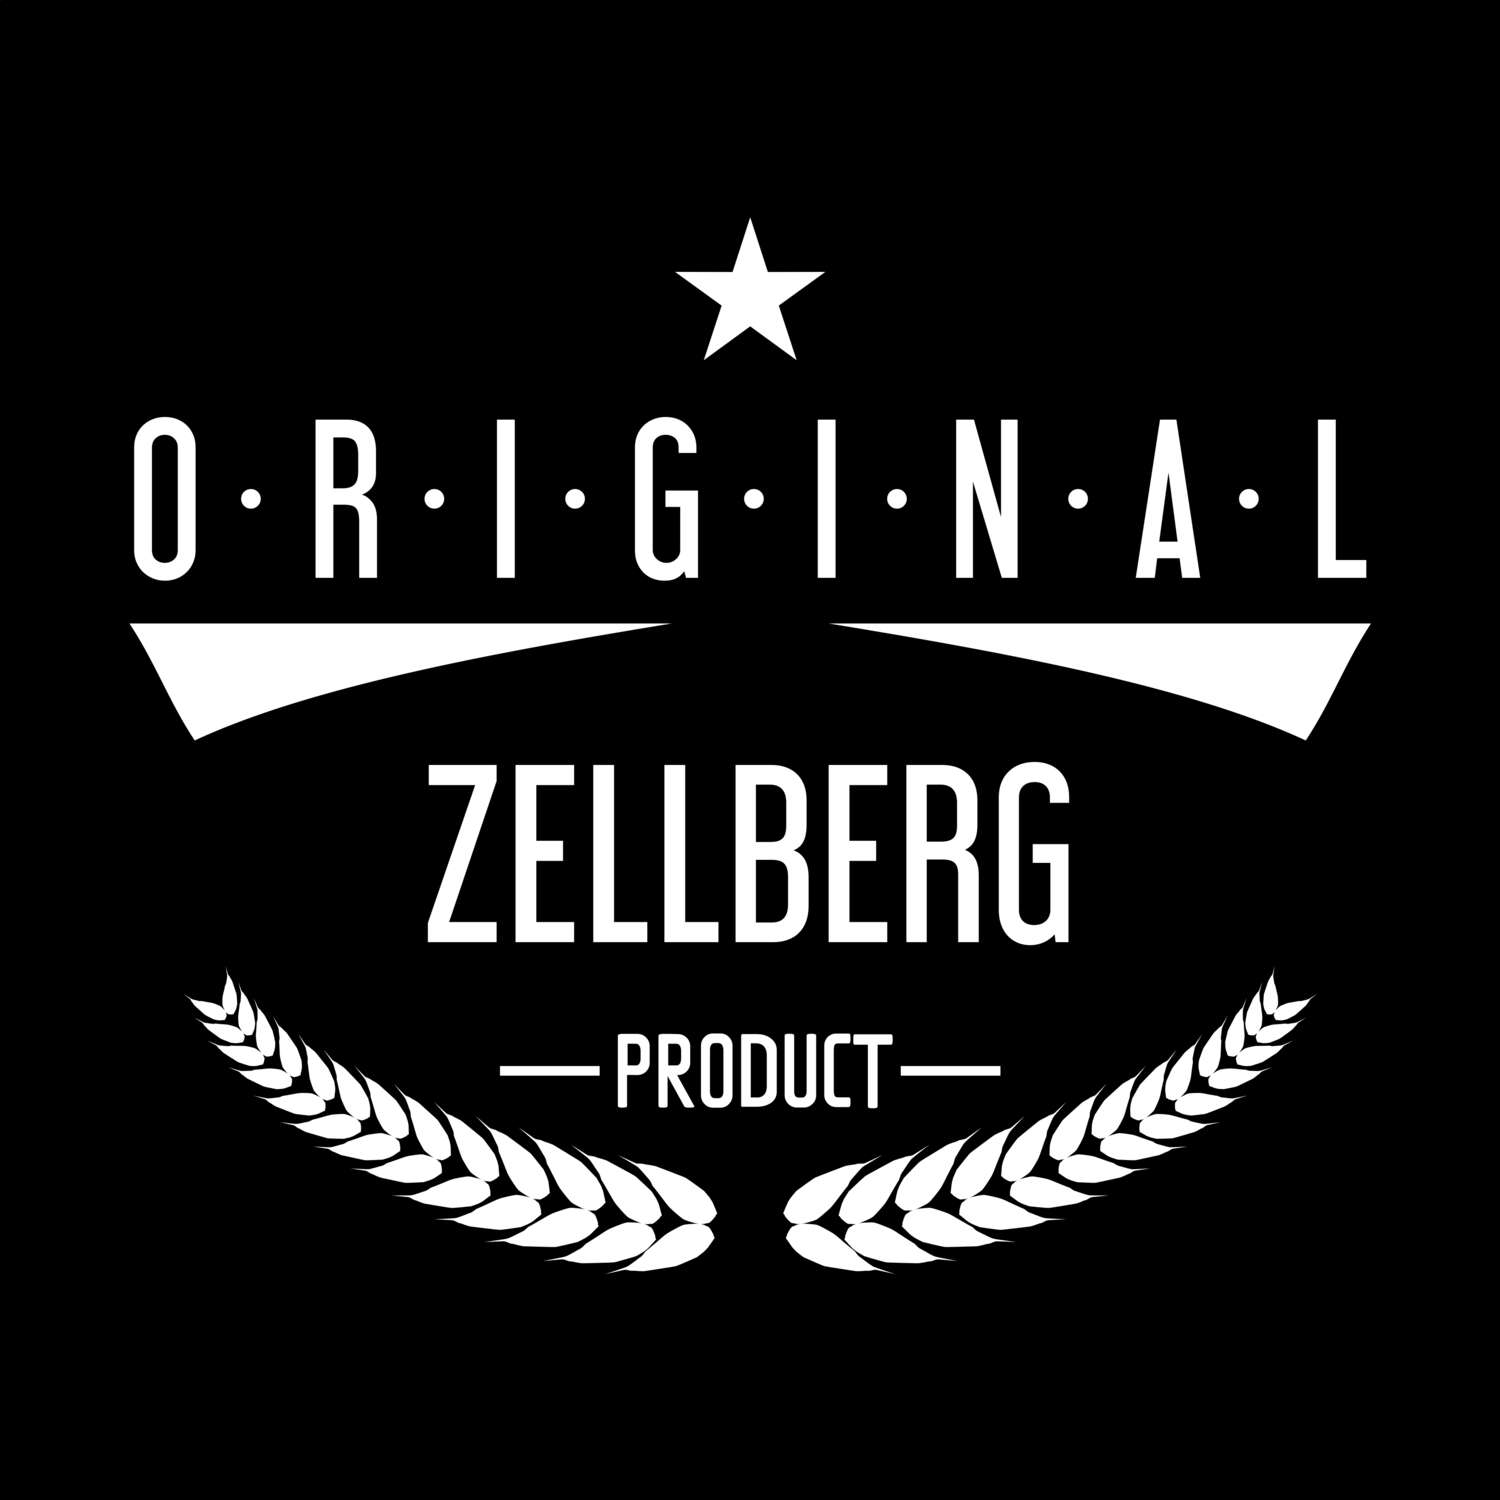 Zellberg T-Shirt »Original Product«